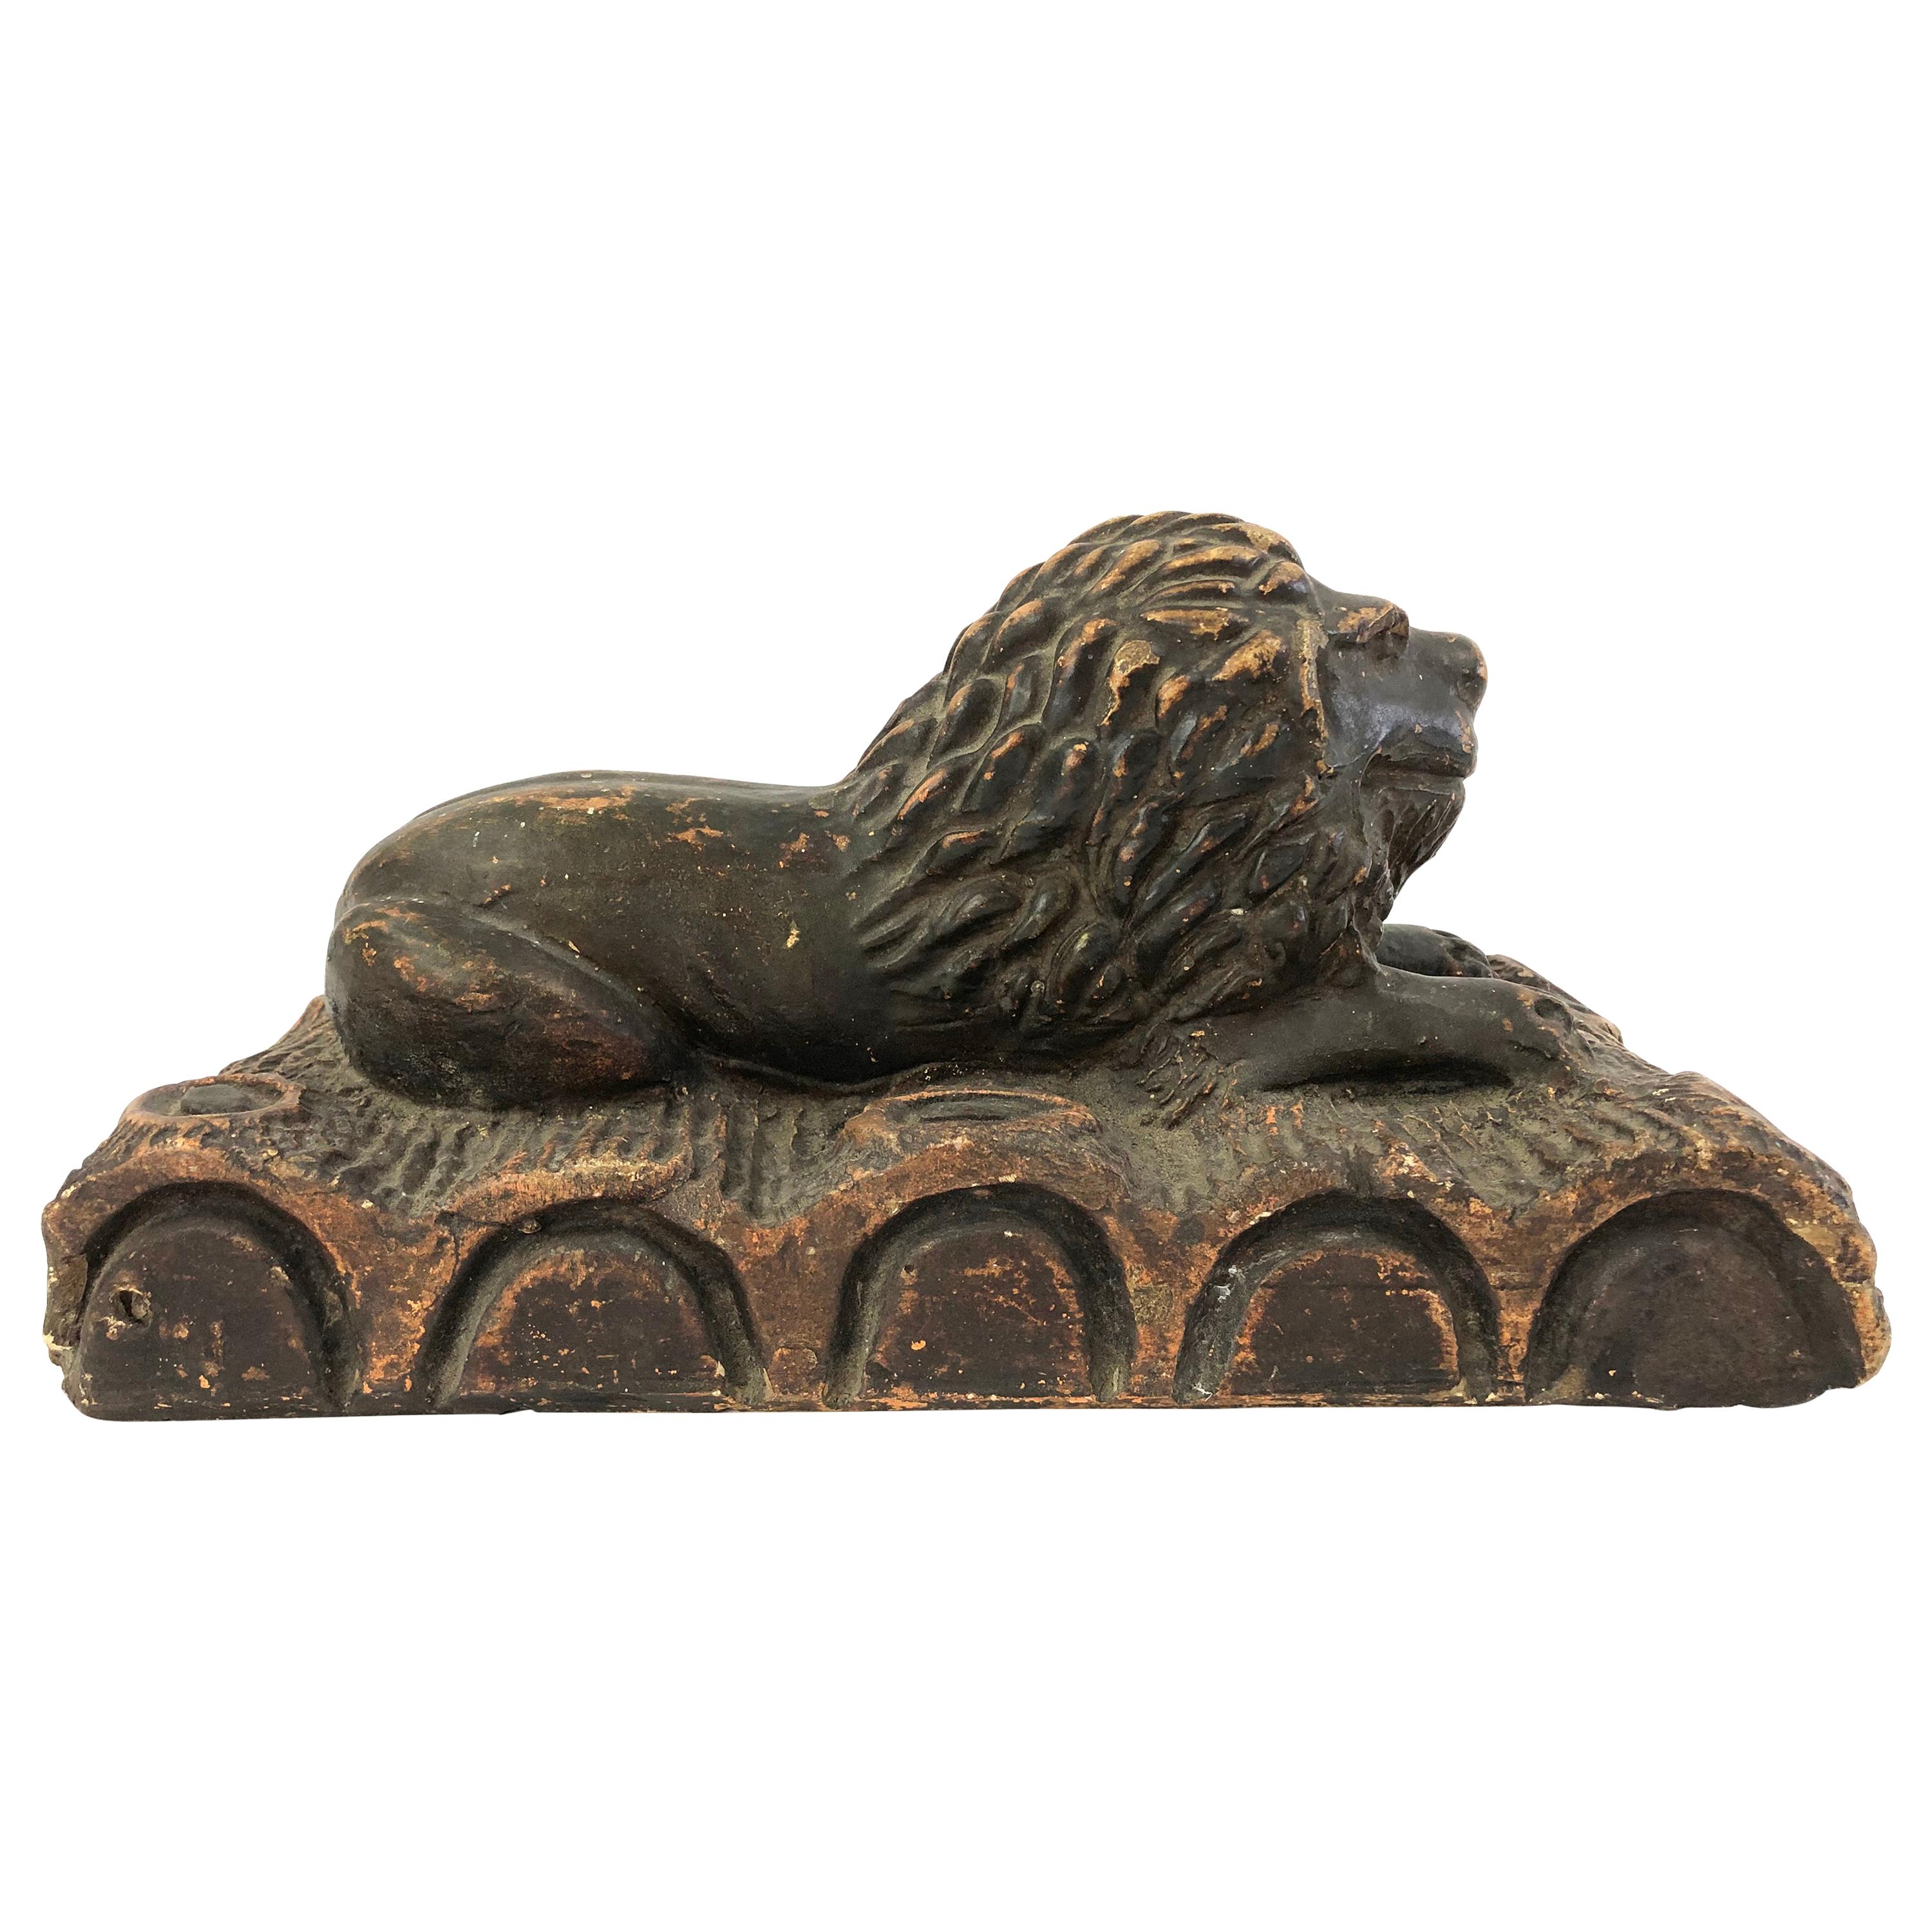 19th Century Folk Art Pottery Sculpture of a Lion